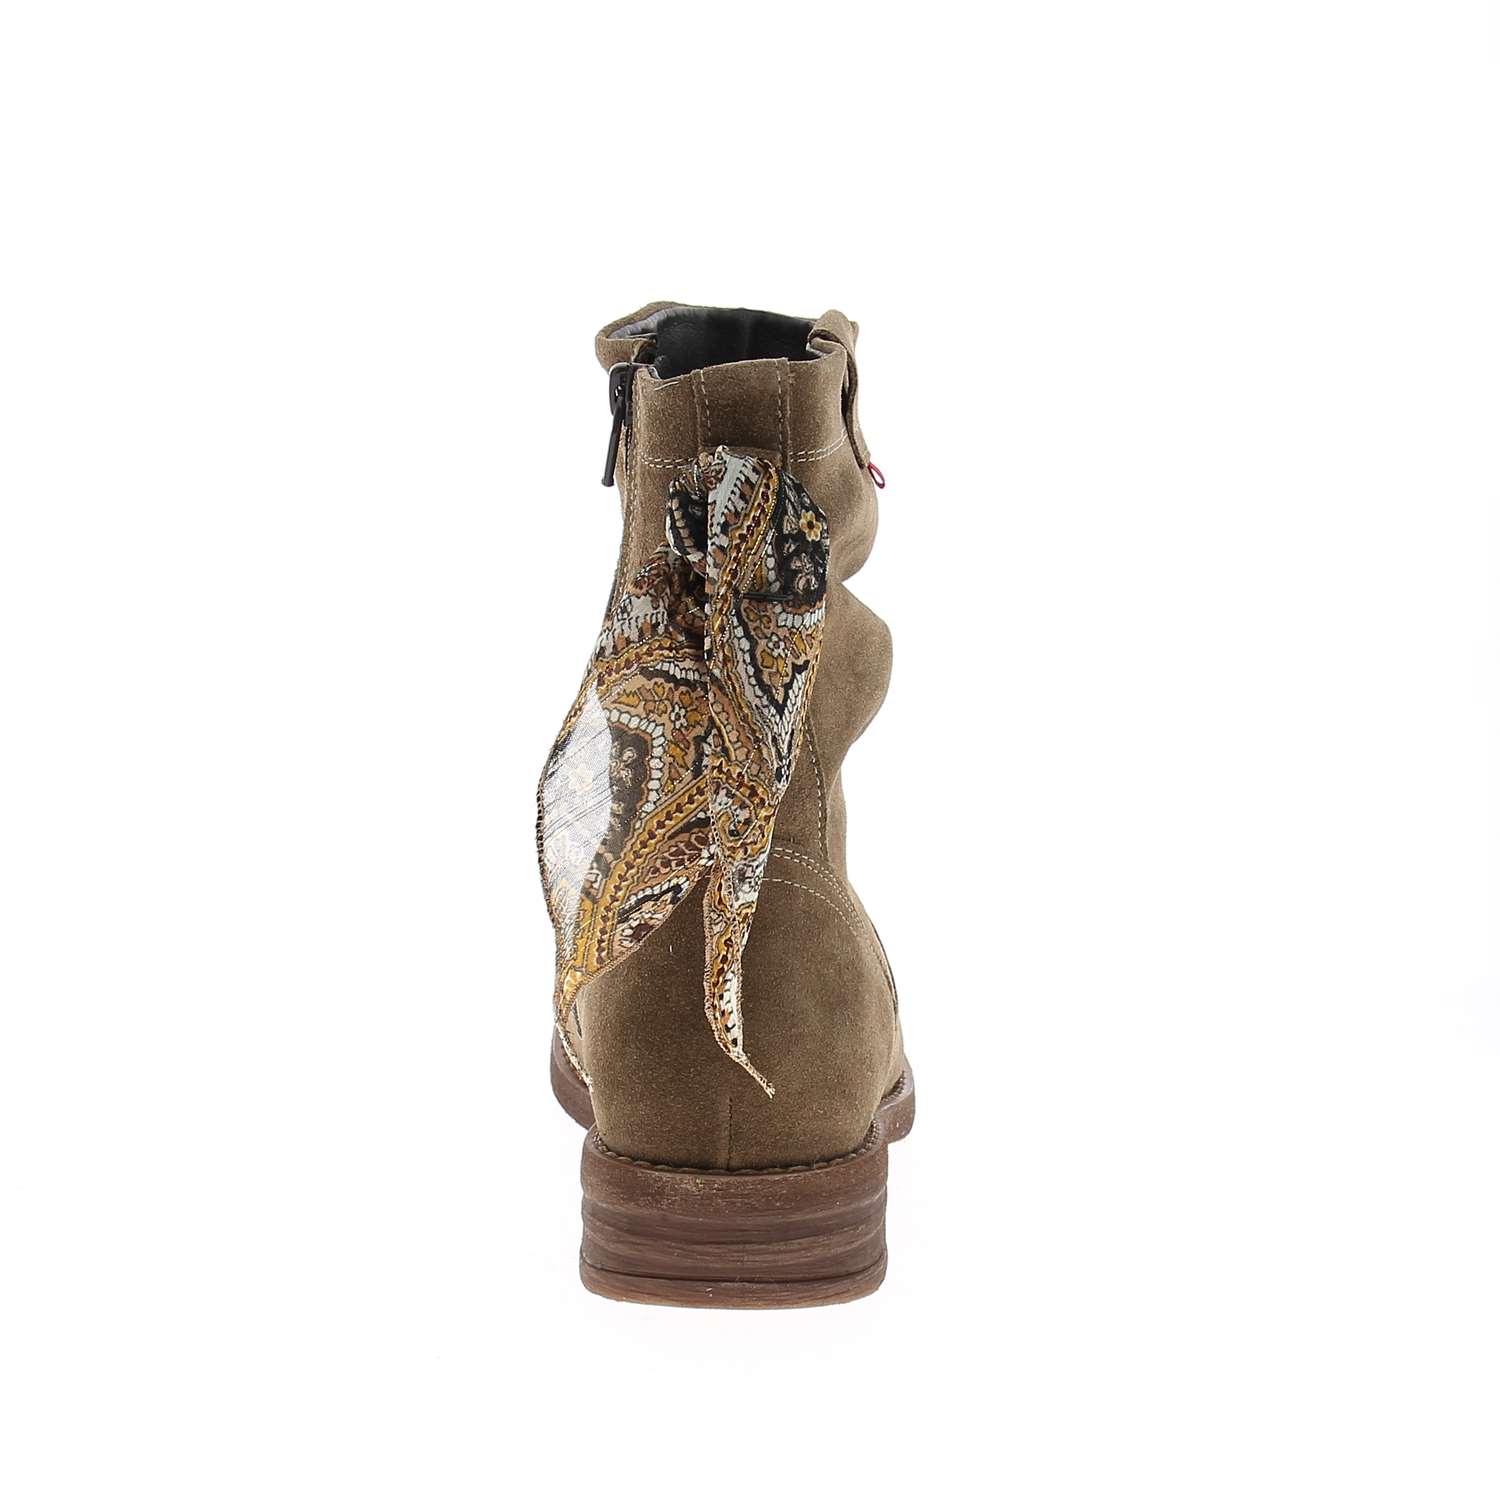 04 - BRUNEI - GOODSTEP - Boots et bottines - Cuir